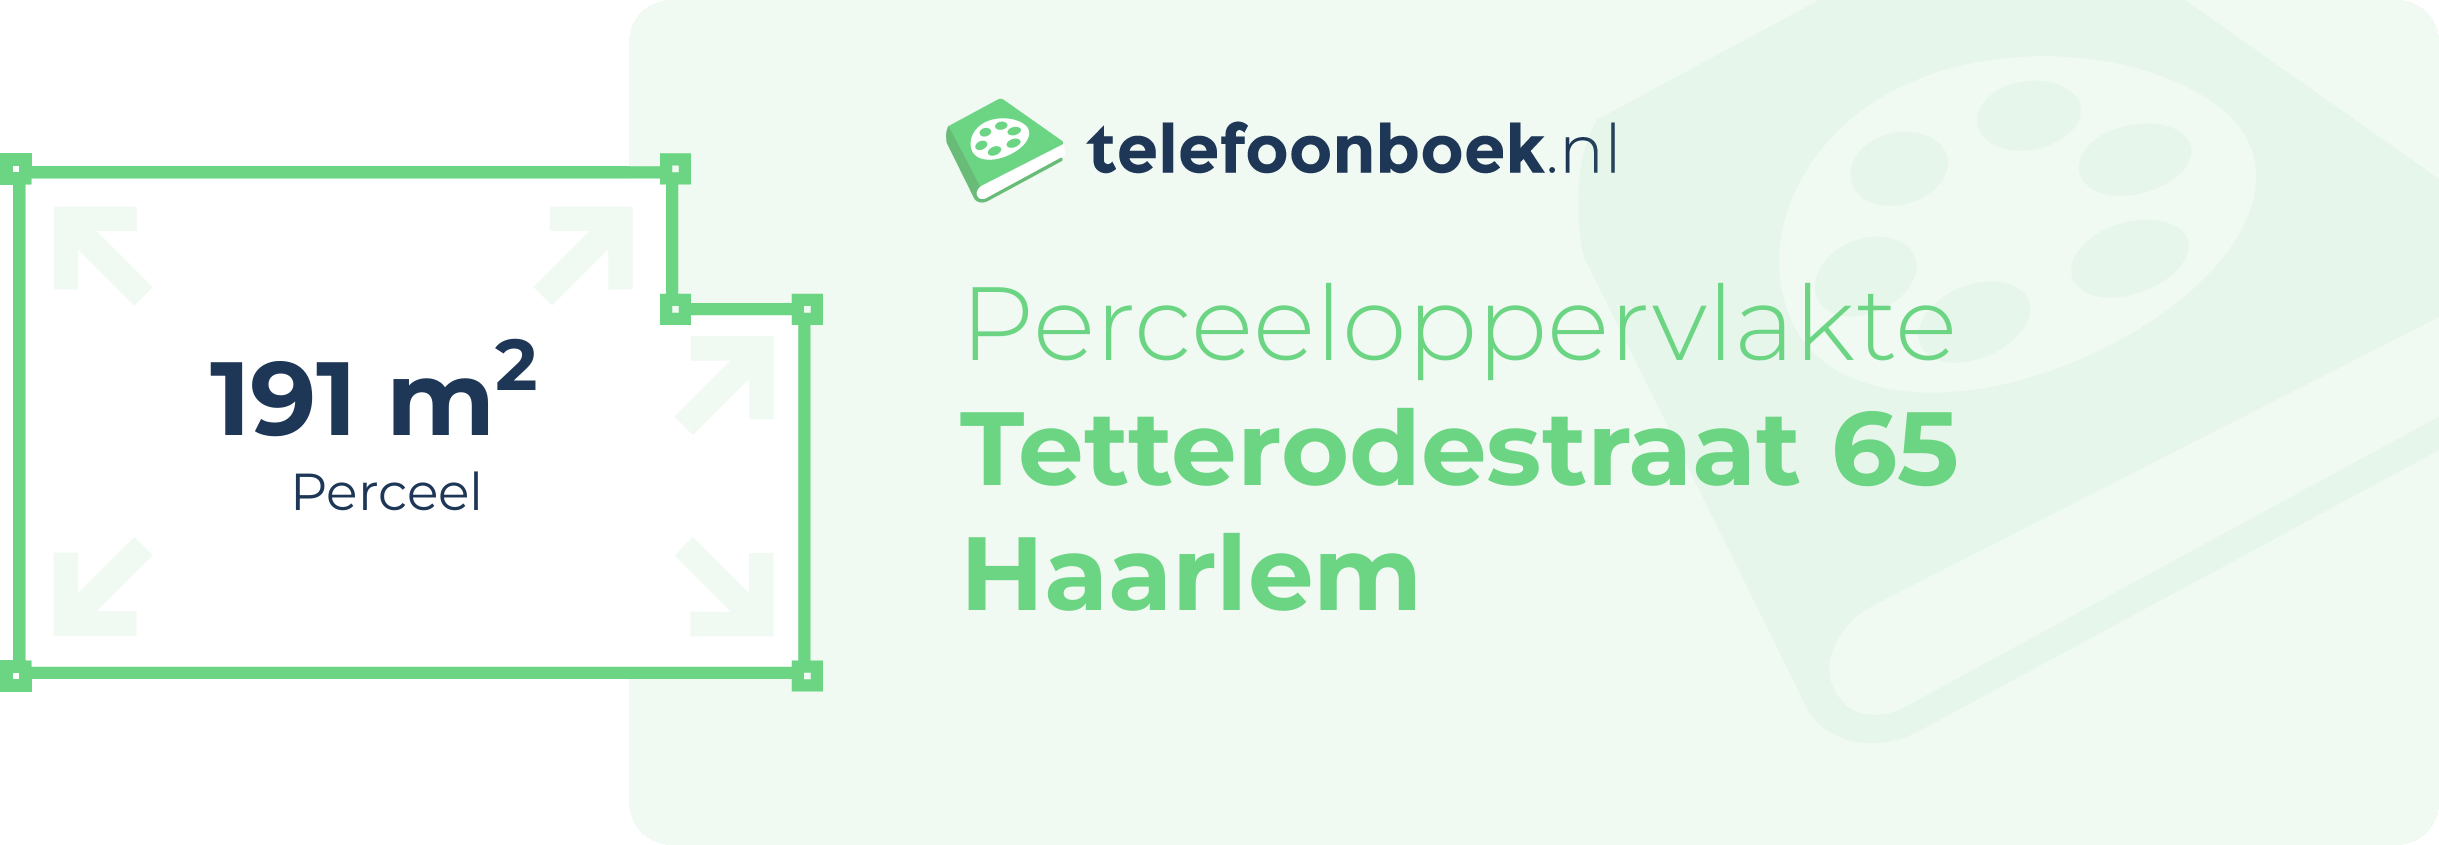 Perceeloppervlakte Tetterodestraat 65 Haarlem